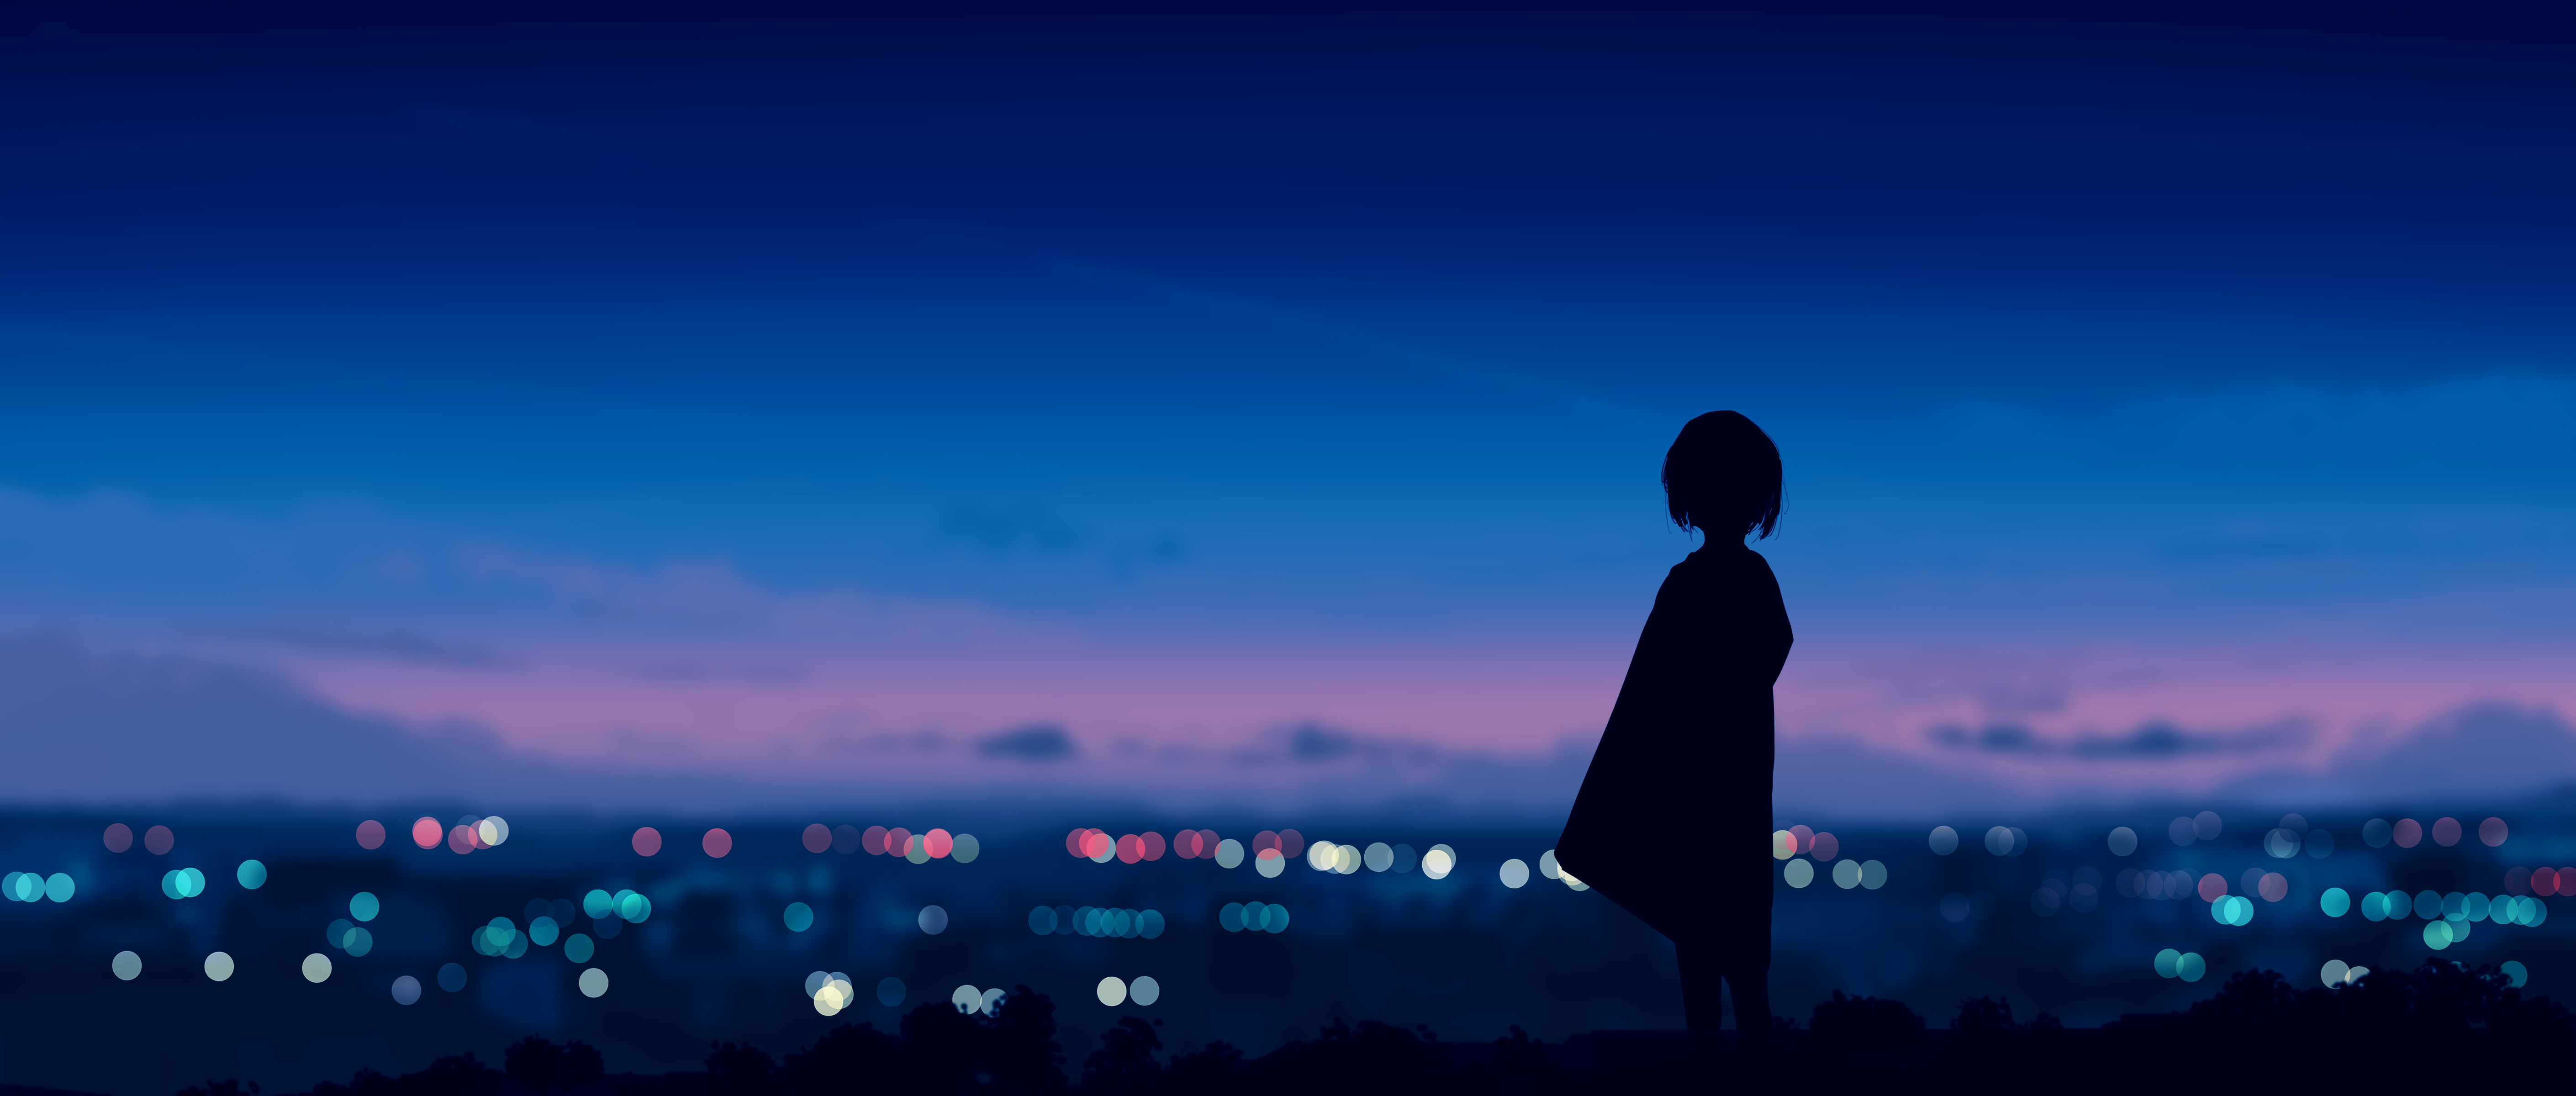 Anime Anime Girls Artwork Sky Minimalism Sunset Clouds Gracile Illustration Wide Screen City Lights 5640x2400